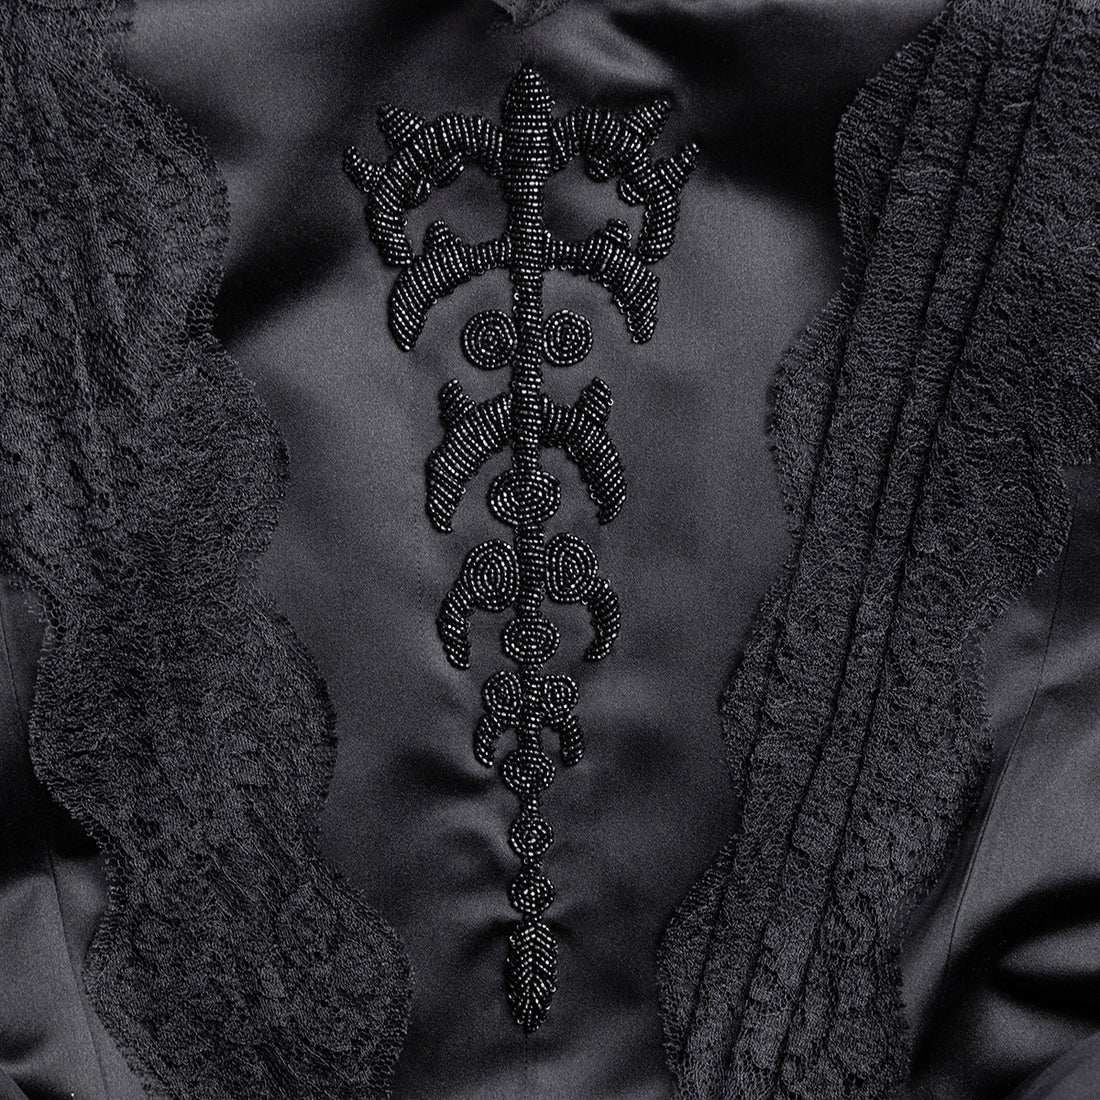 Dolce &amp; Gabbana satin jacket with elaborate lace details